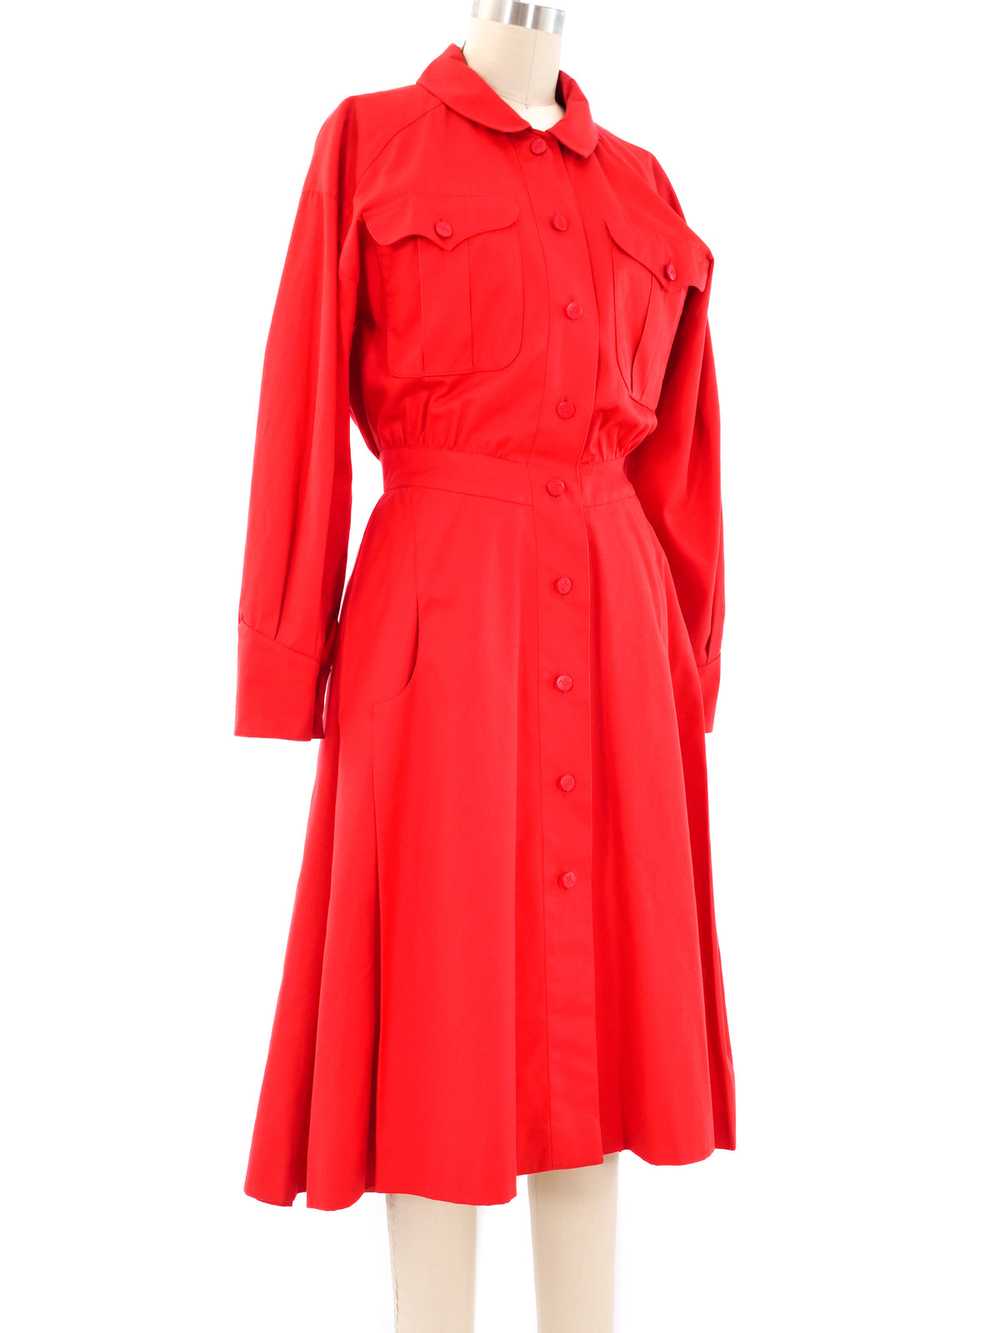 Karl Lagerfeld Red Shirt Dress - image 5